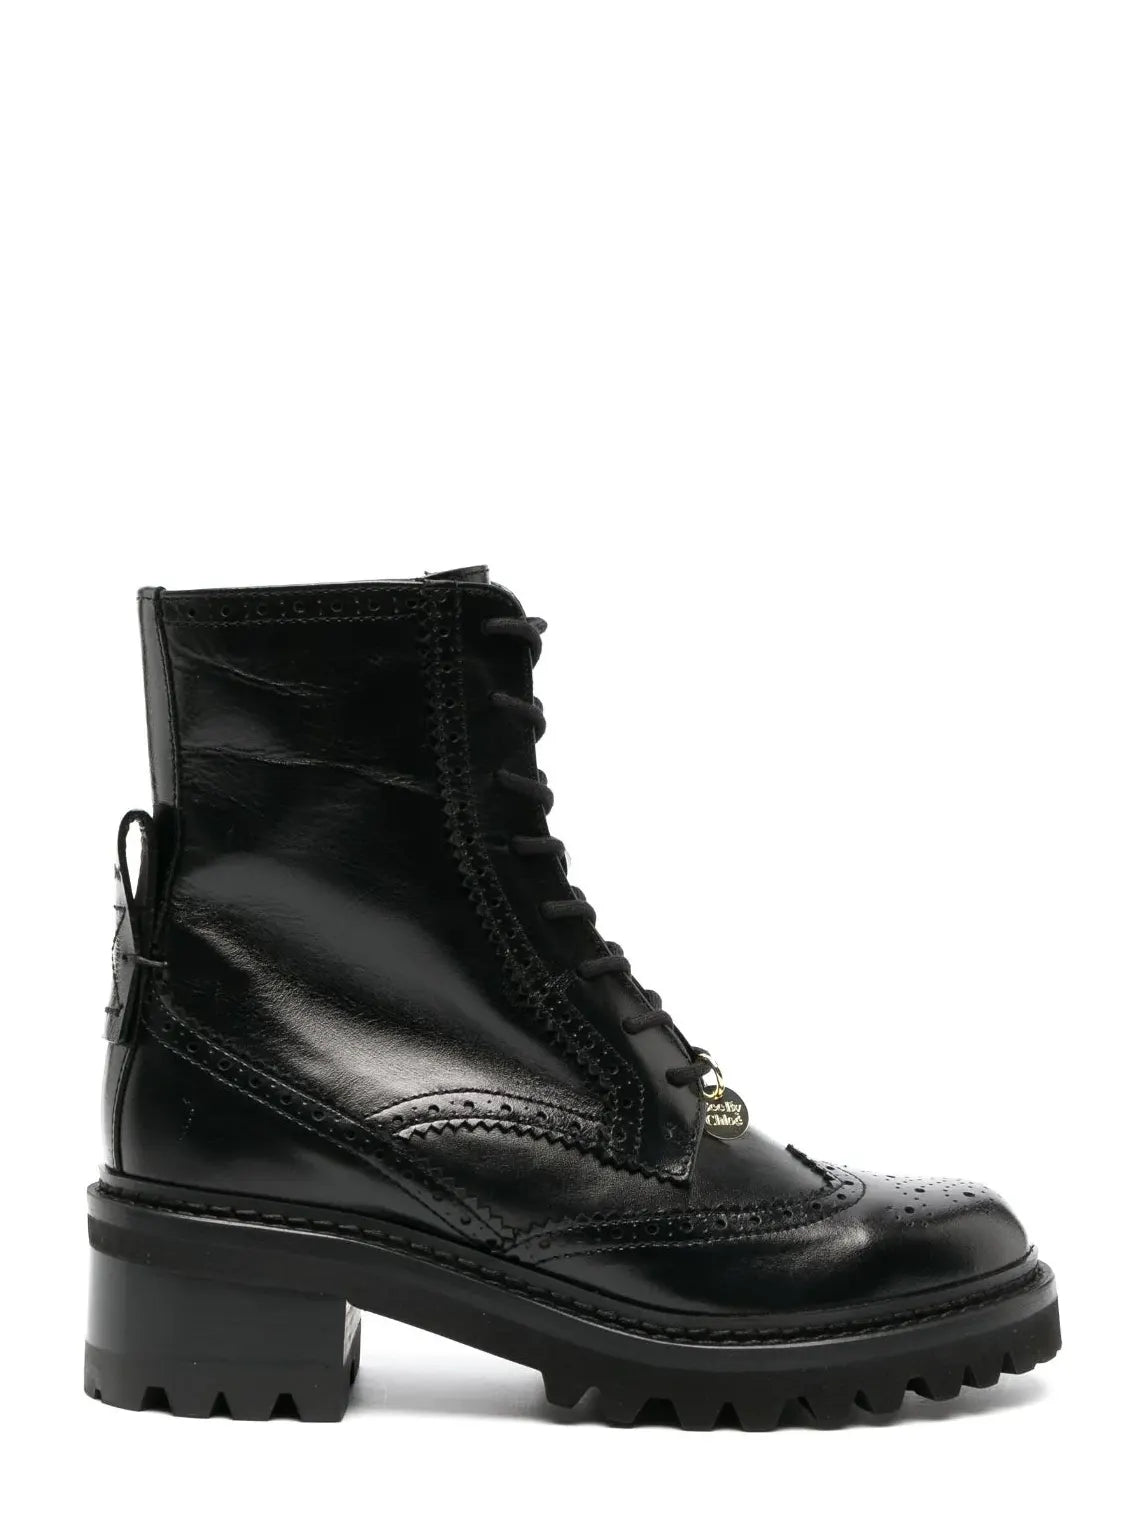 Ariia boots, black